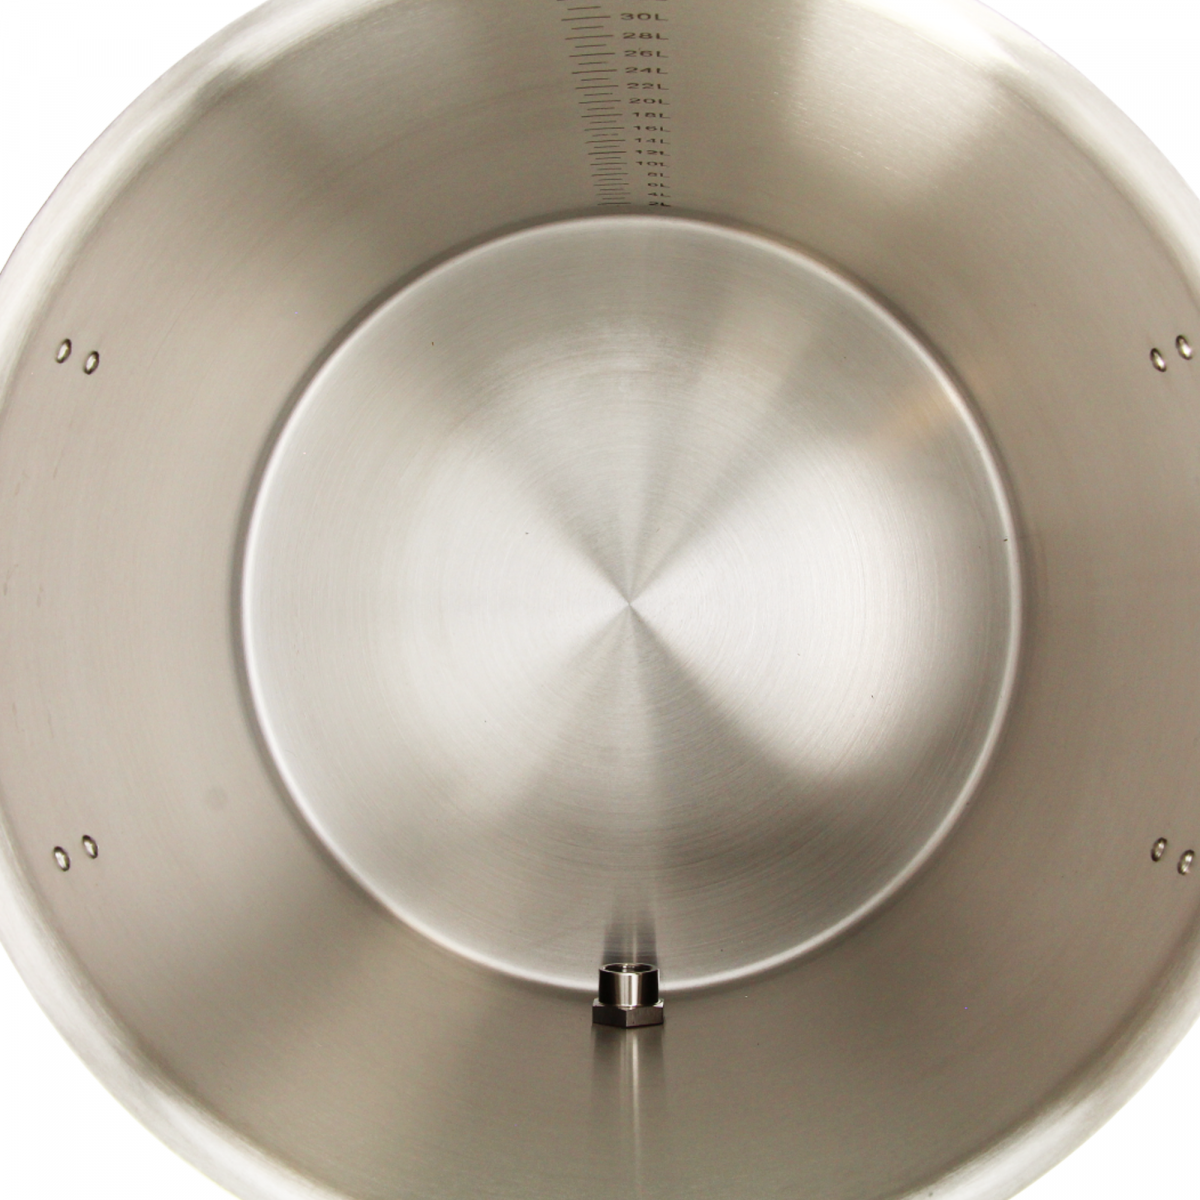 Brewferm homebrew kettle SST 35 l with ball valve (36 x 36 cm)